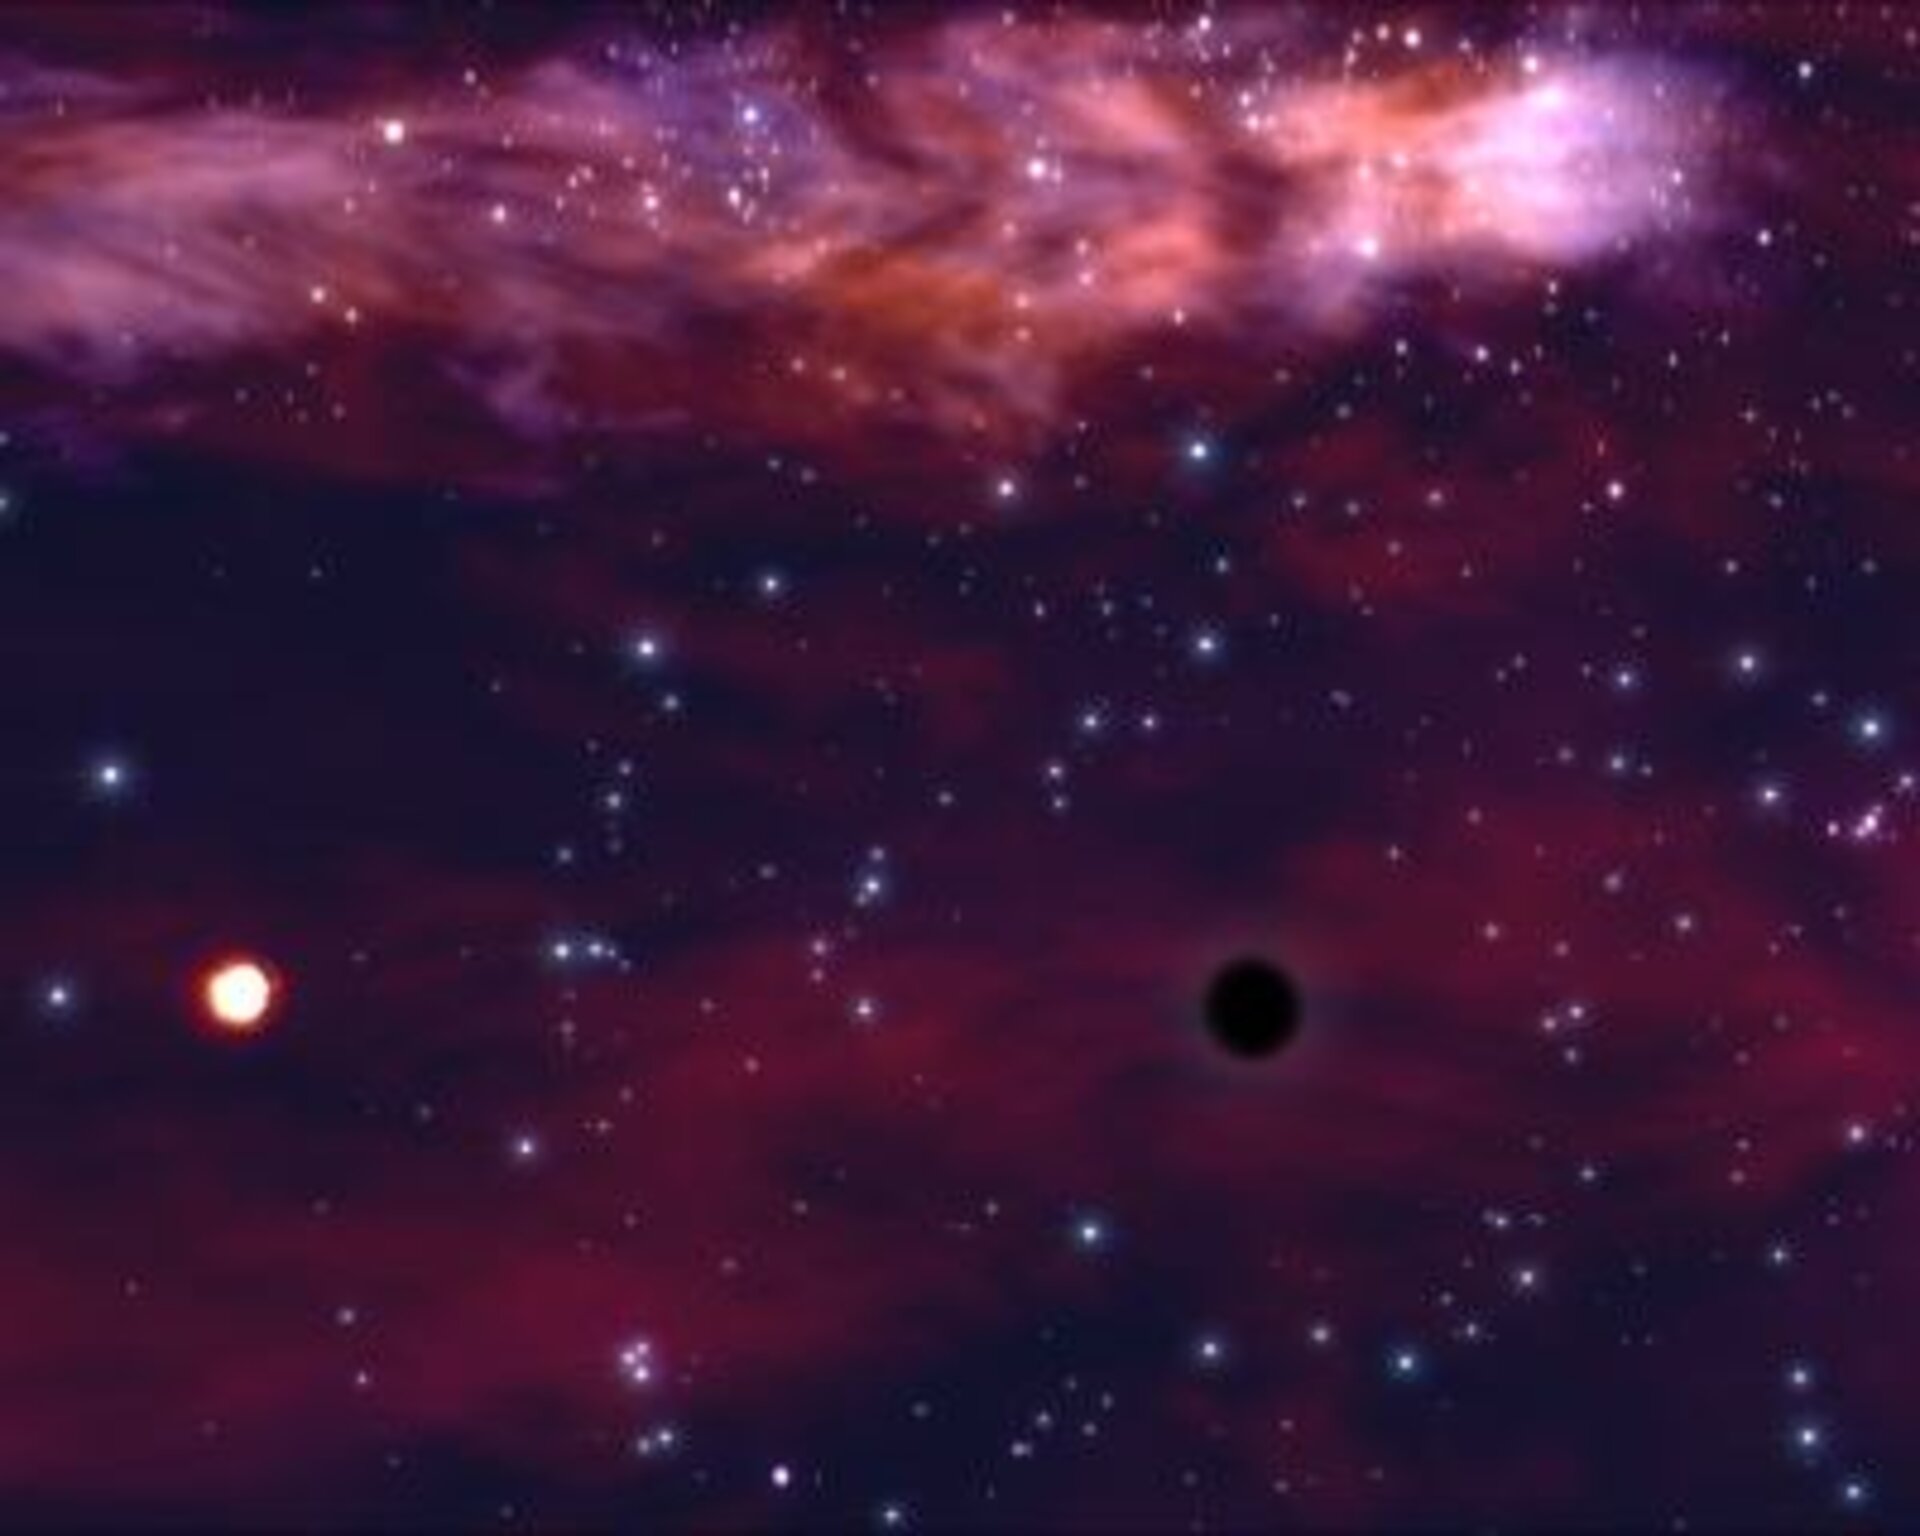 Giant black hole rips star apart - panel detail